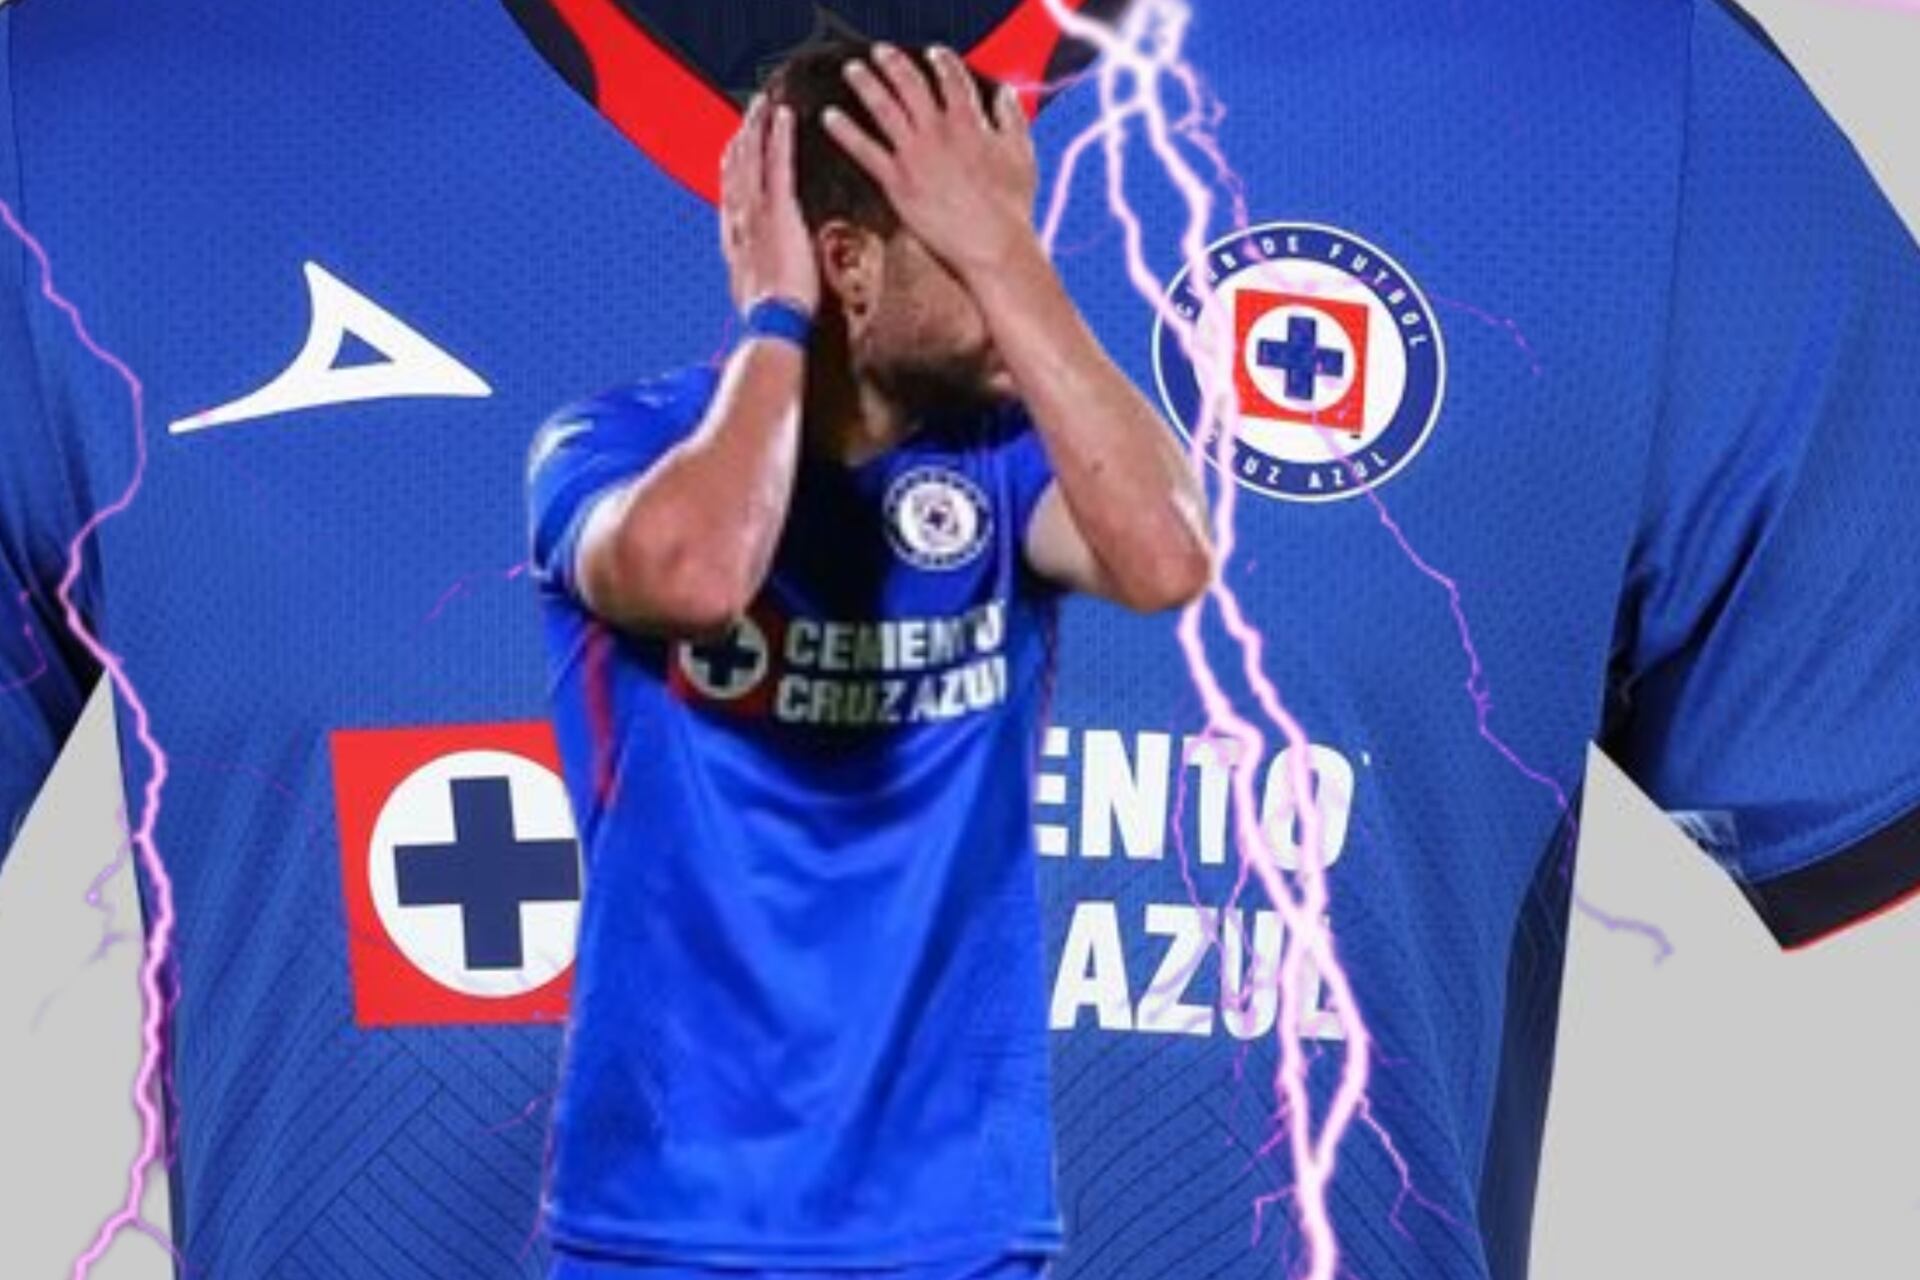 Aunque se ganó, el jugador al que le queda grande la playera de Cruz Azul